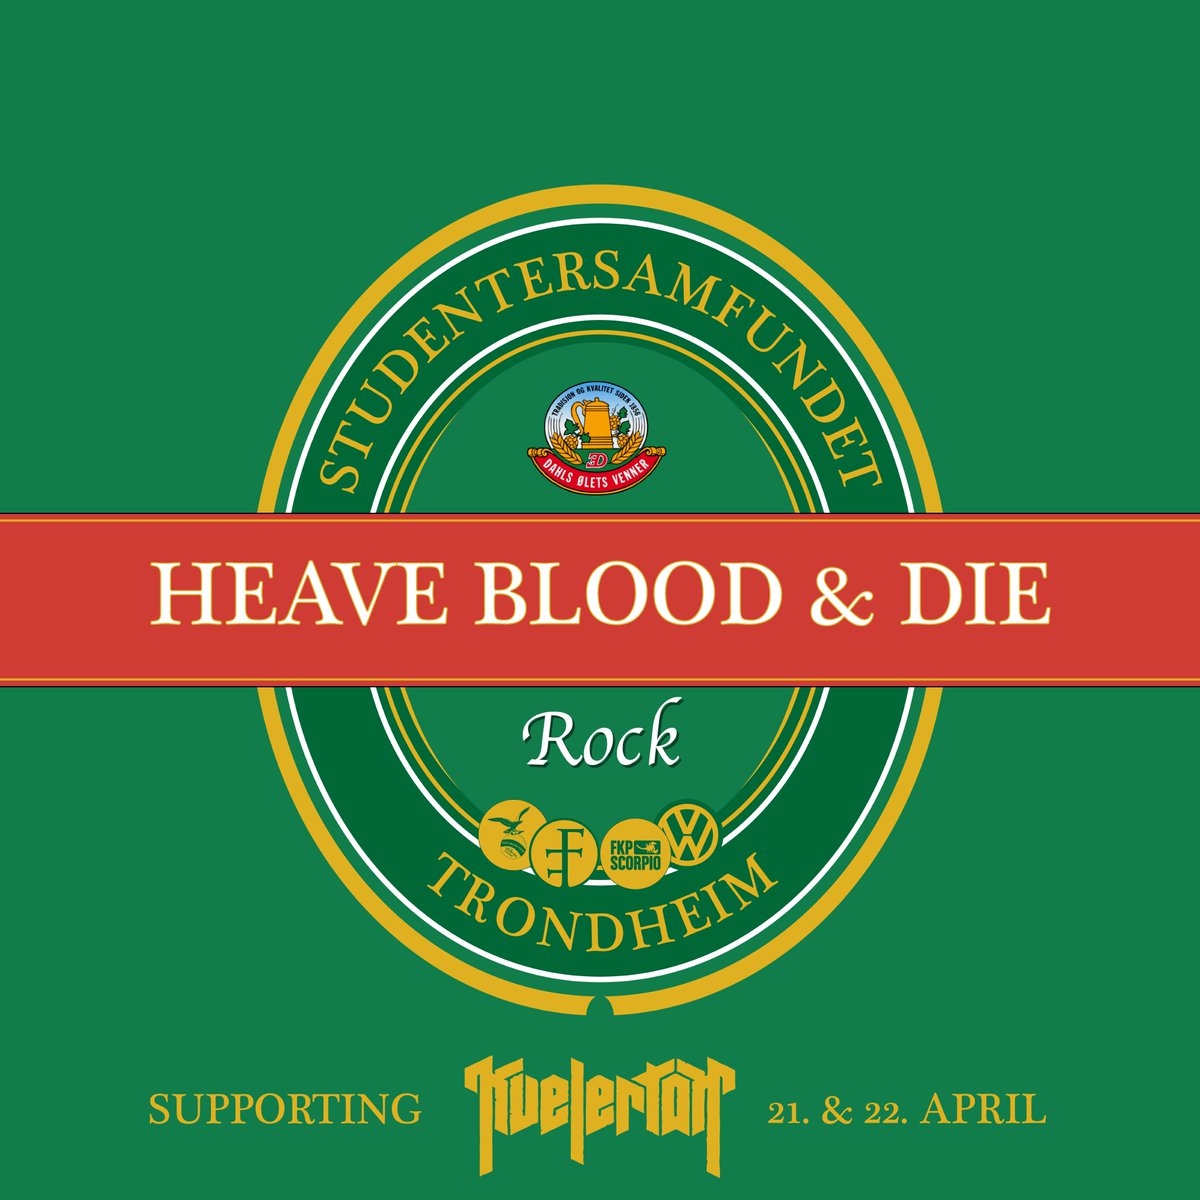 Heave Blood & Die (@heaveblooddie) on Twitter photo 2022-04-06 10:40:54